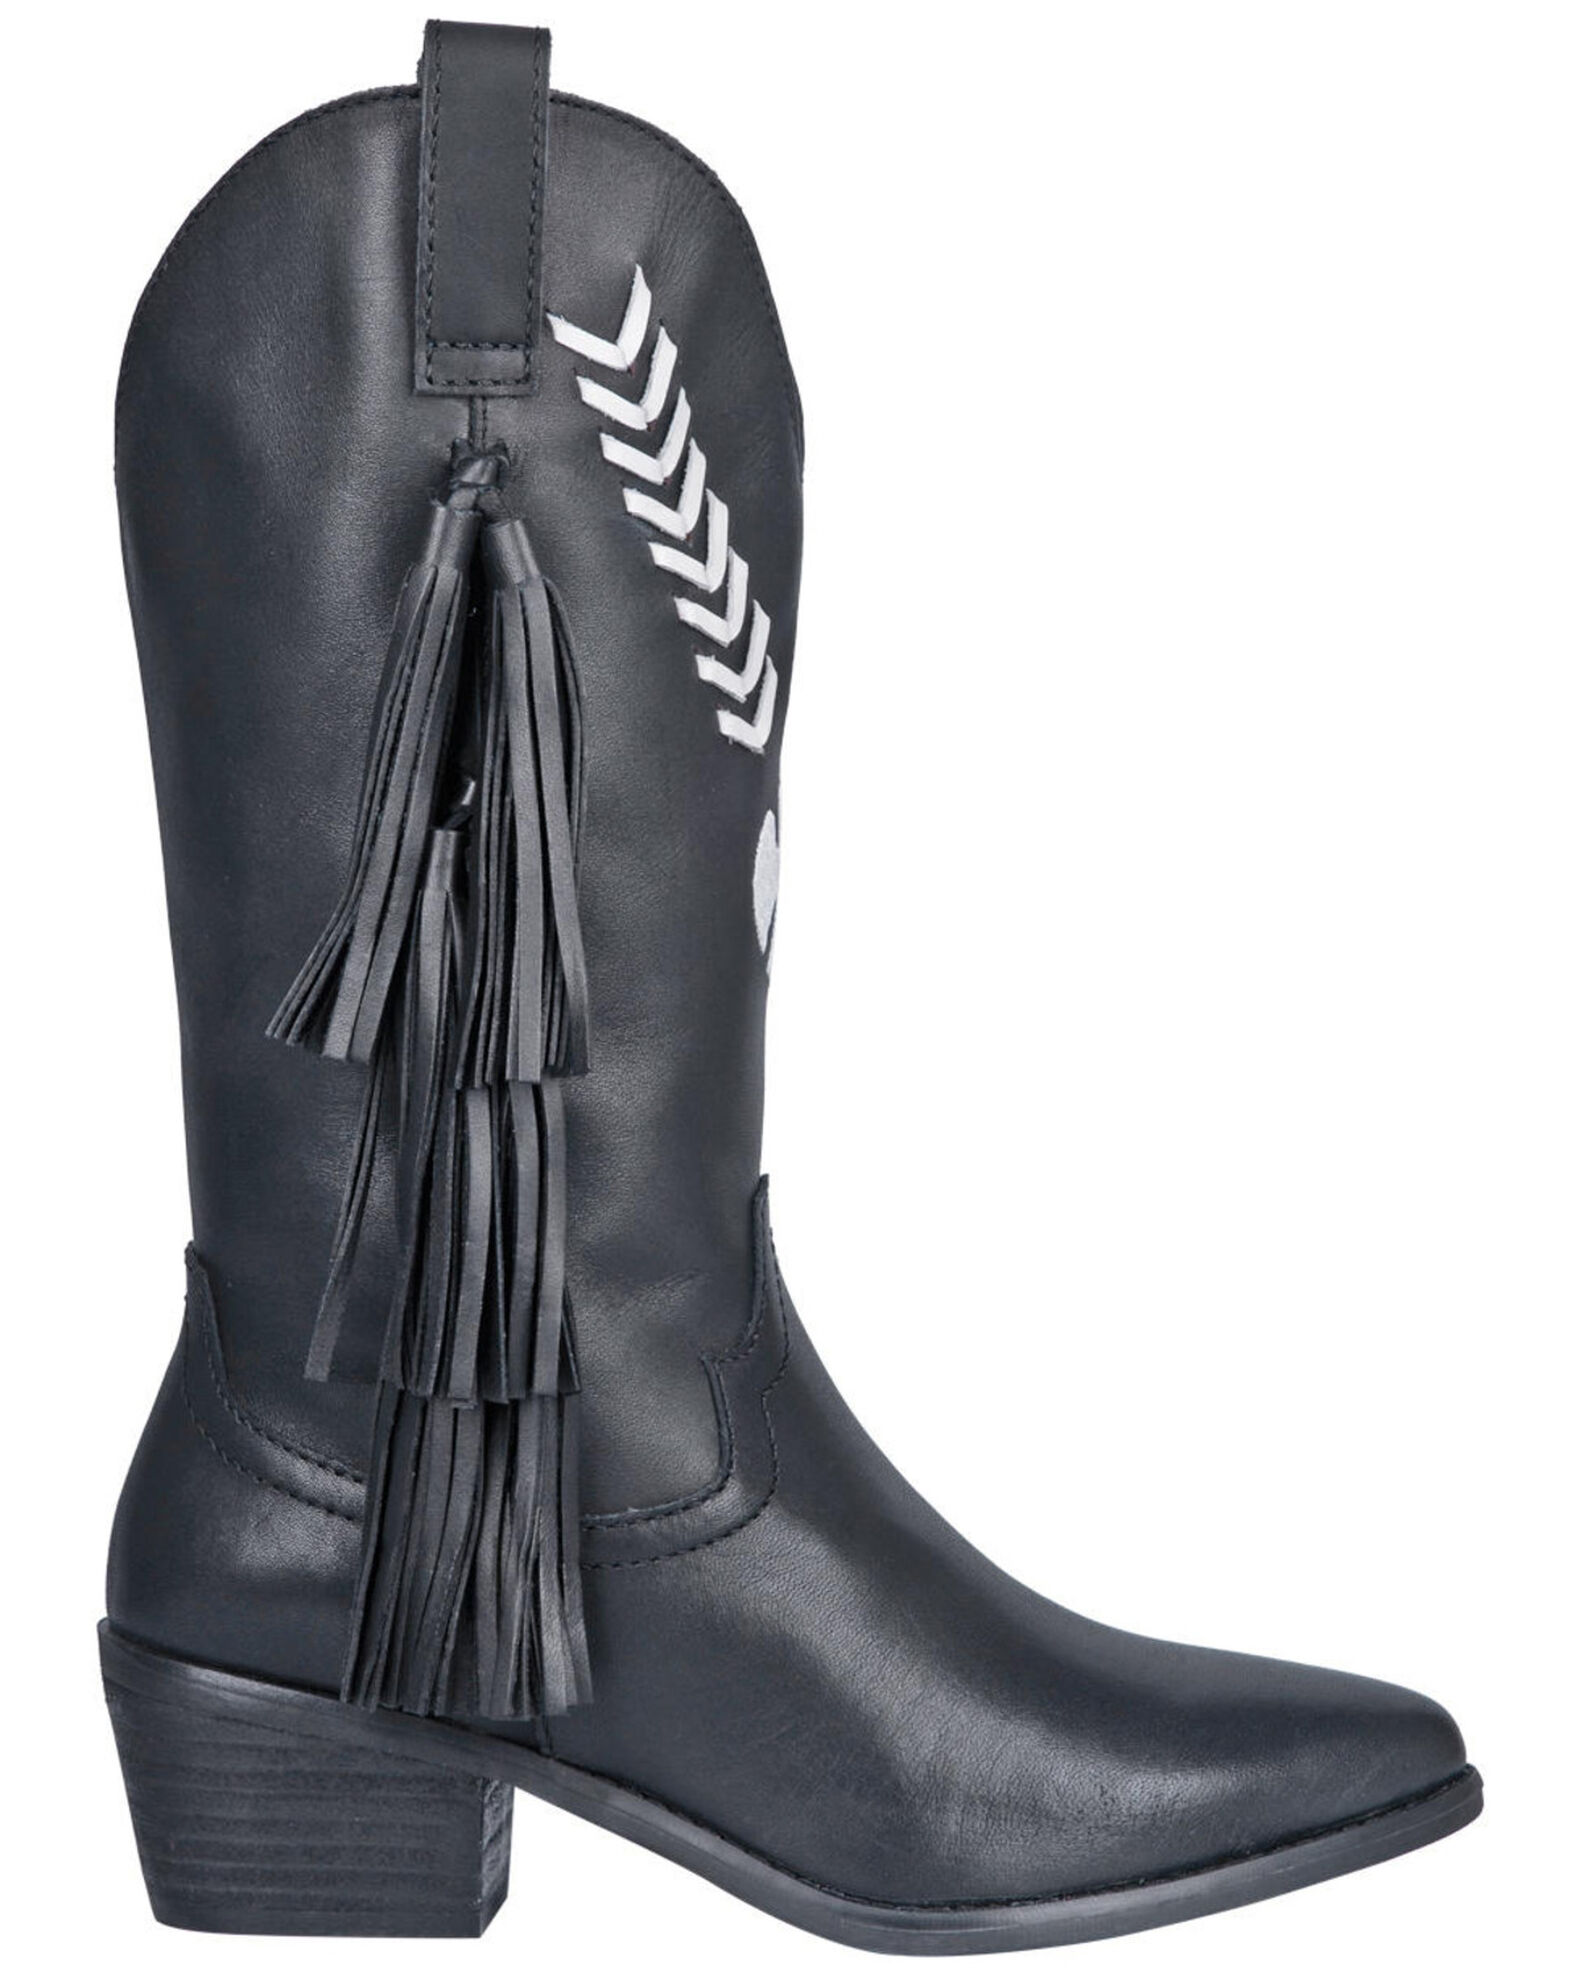 Dingo Women's Thunderbird Western Boots - Round Toe